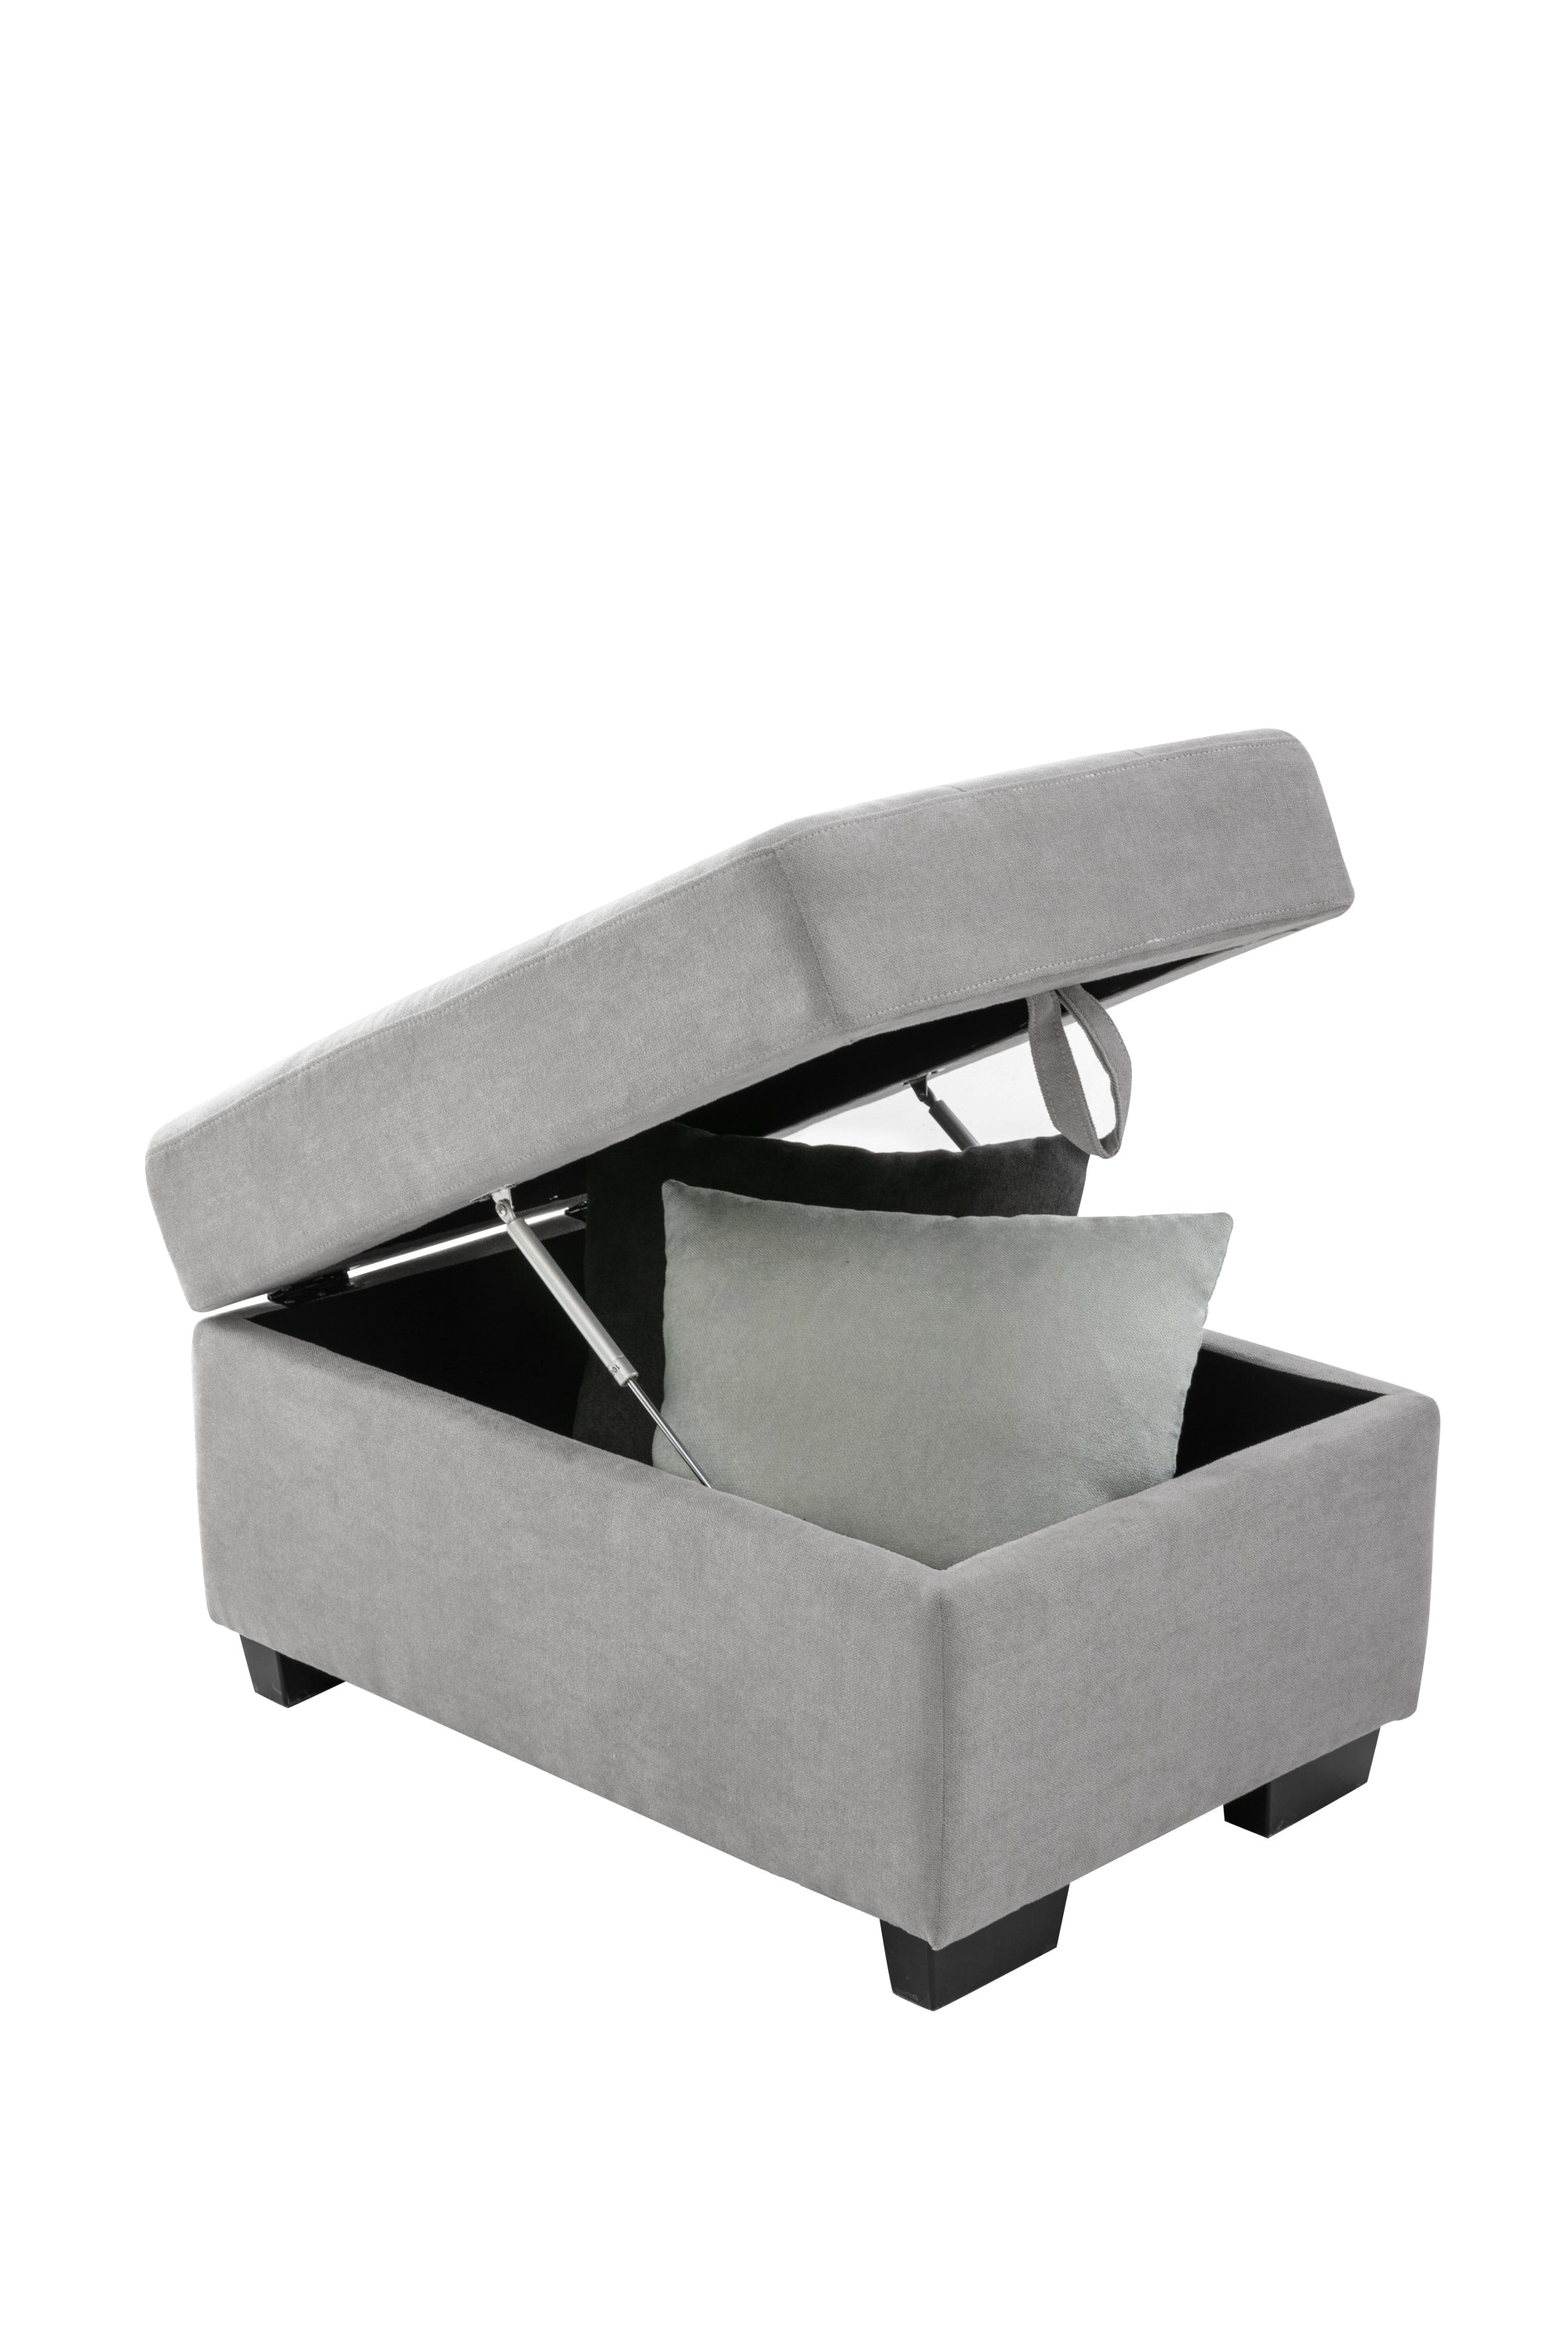 Gray L Shaped Sleeper Sectional Sofa - Super Comfy